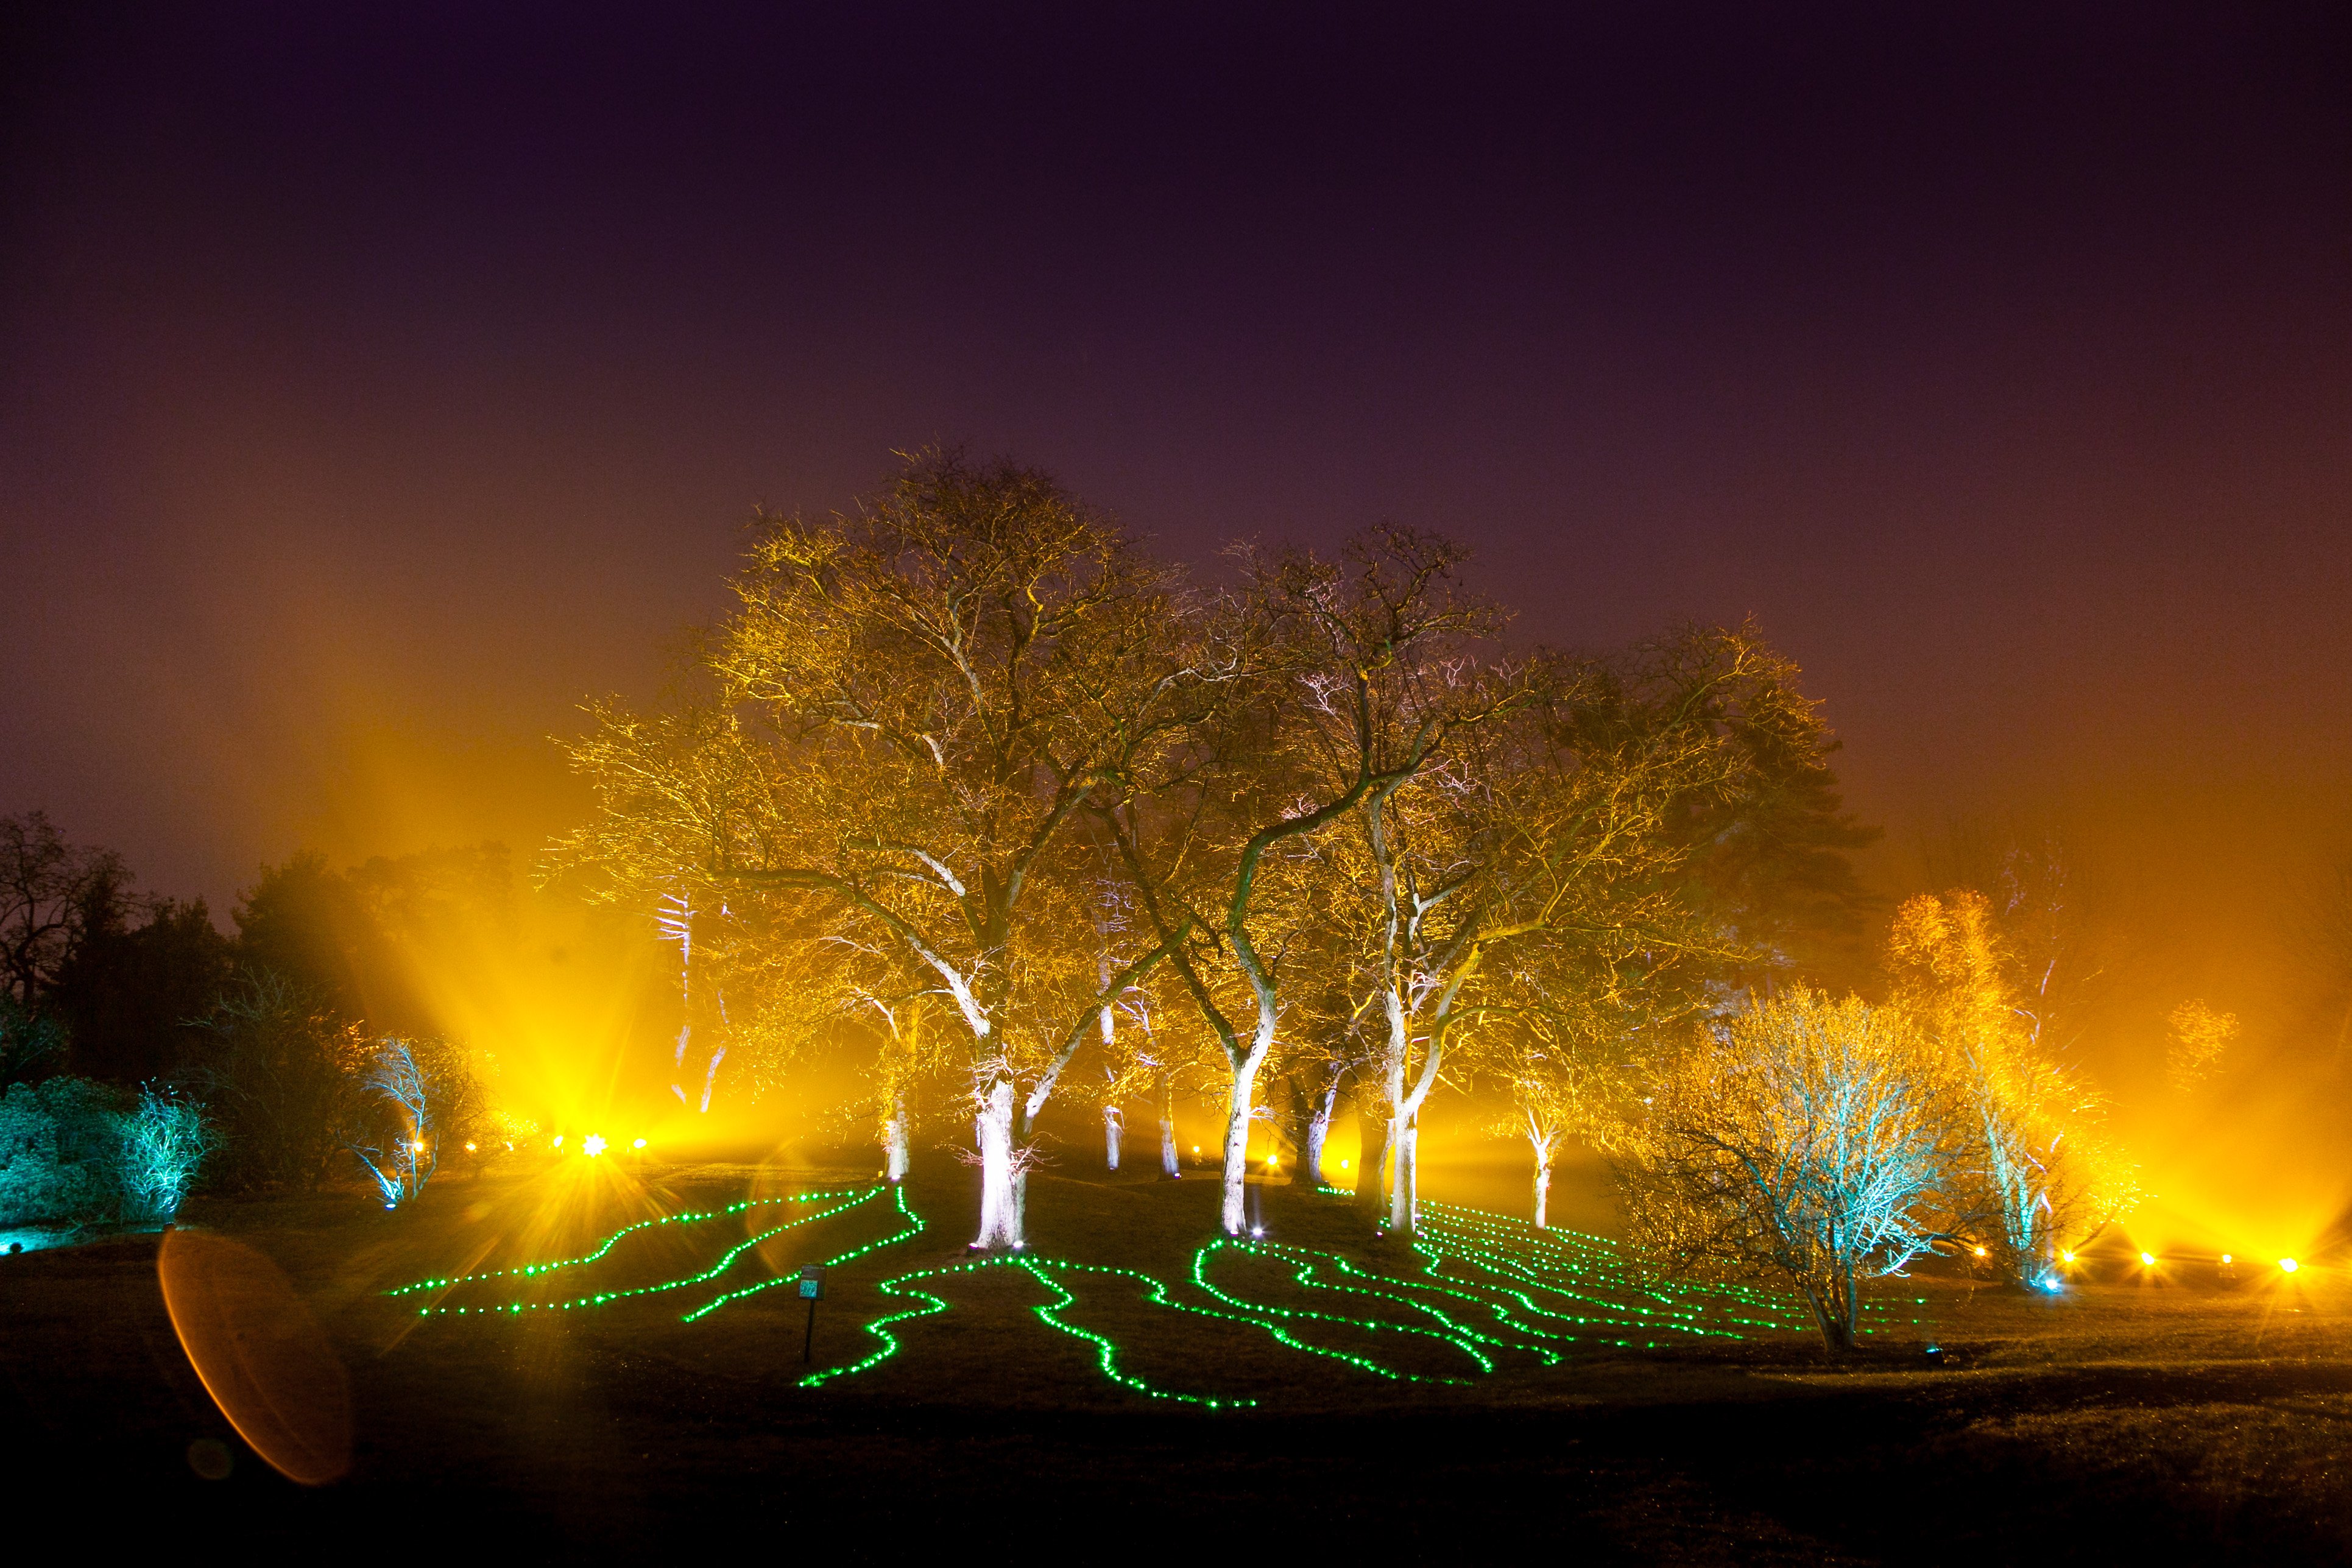 Illumination Tree Lights at The Morton Arboretum Returns November 20